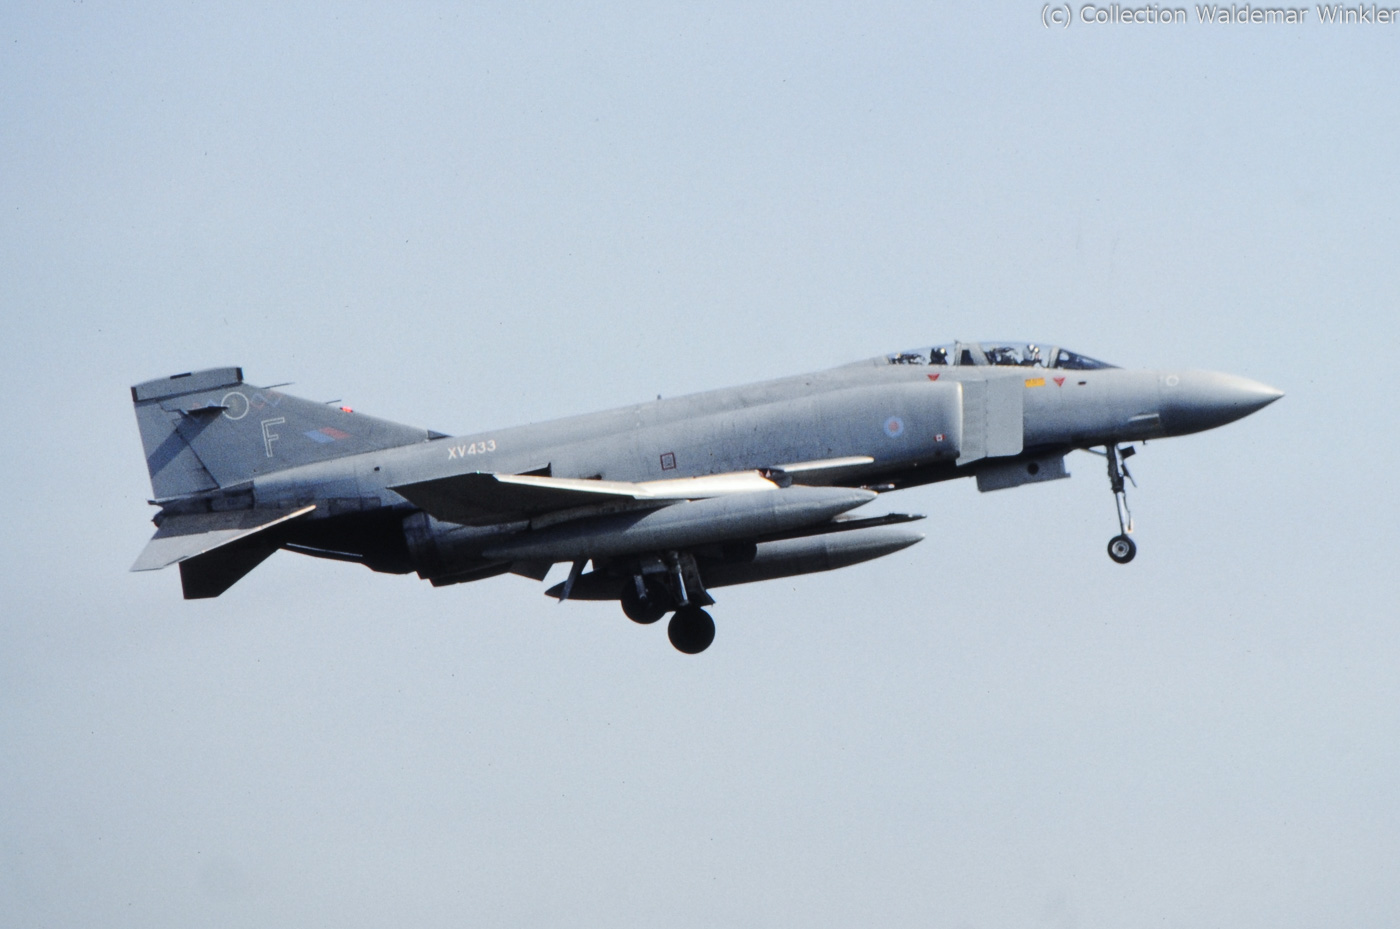 F-4_Phantom_II_DSC_2231.jpg